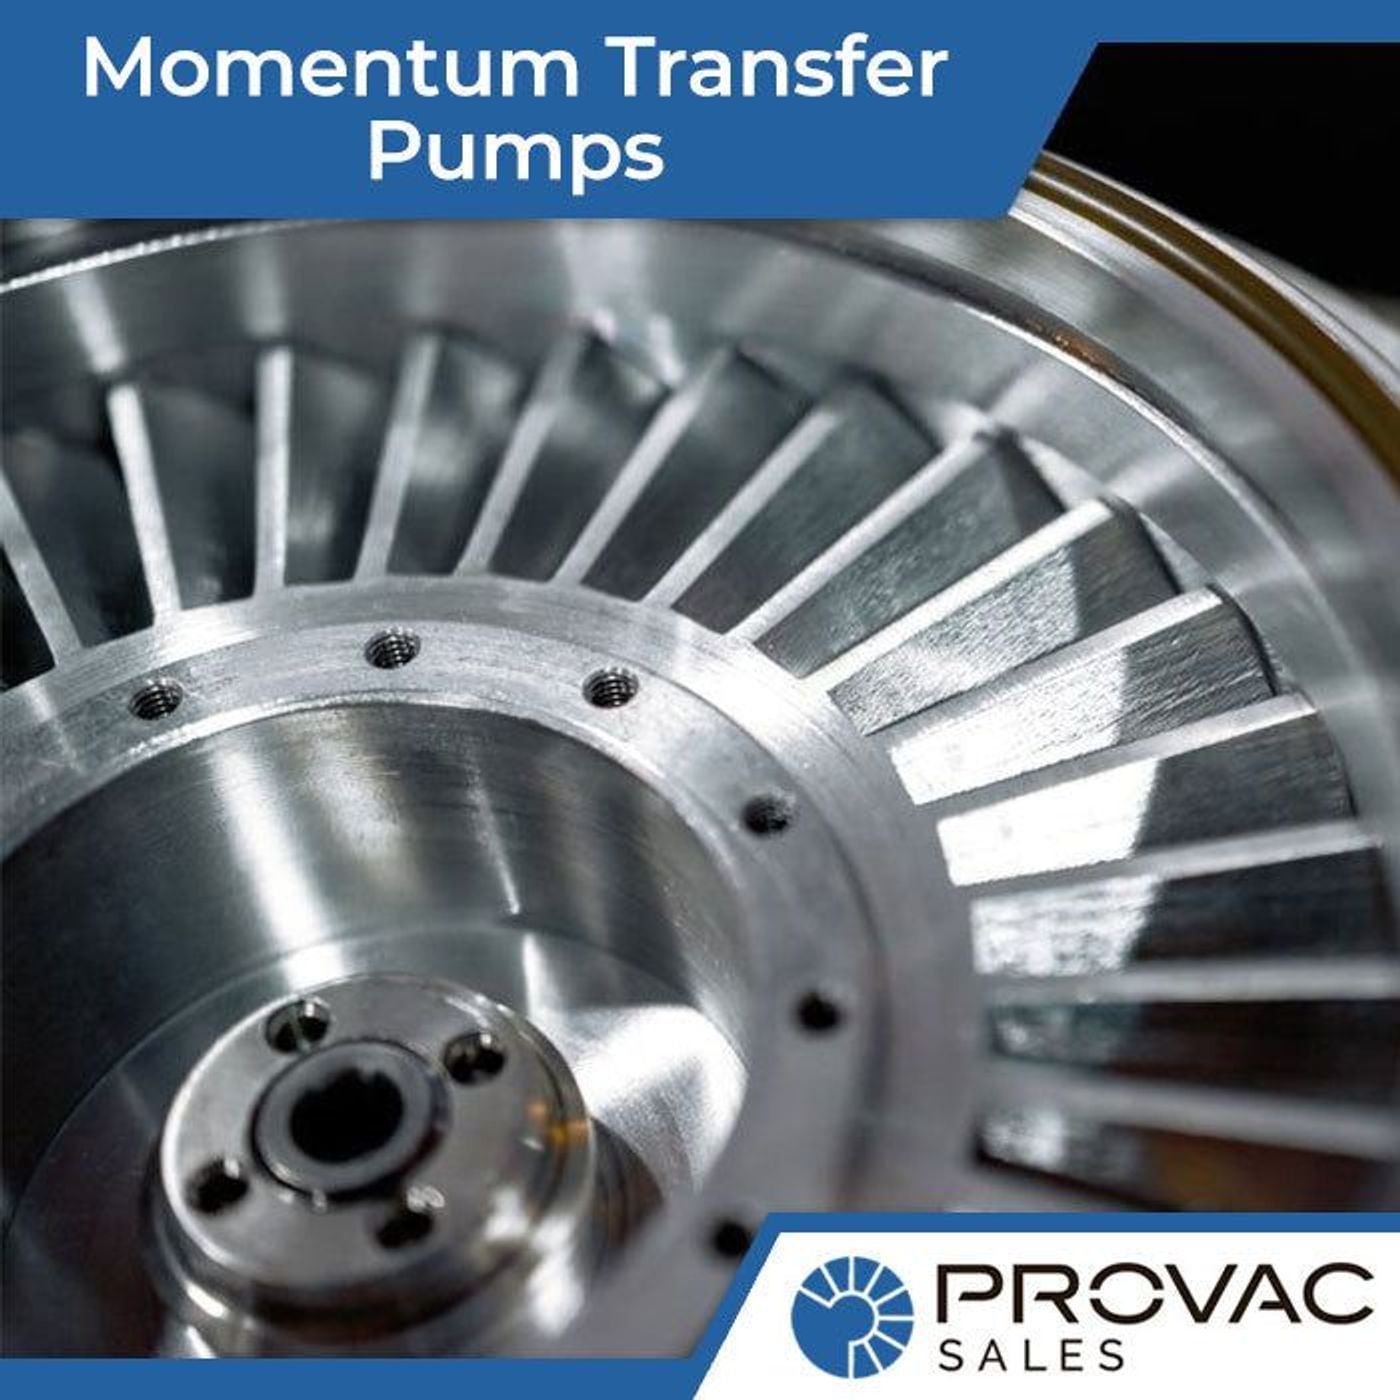 Momentum Transfer Pumps